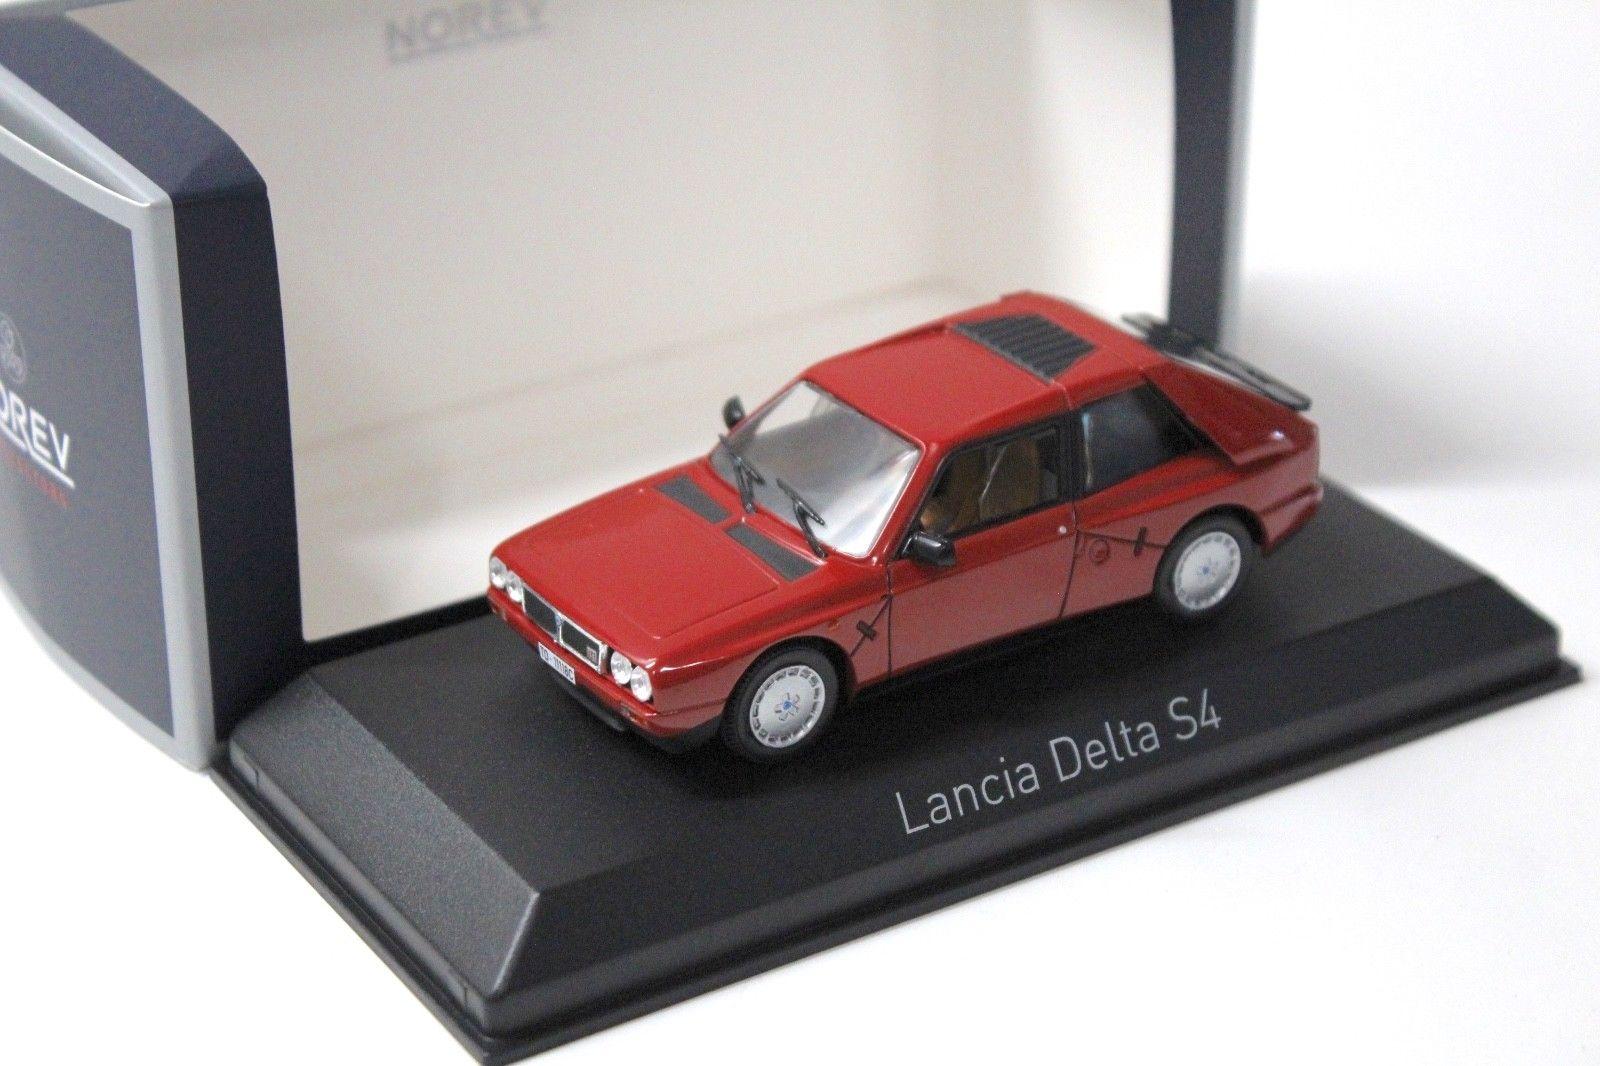 1:43 Norev Lancia Delta S4 red 1985